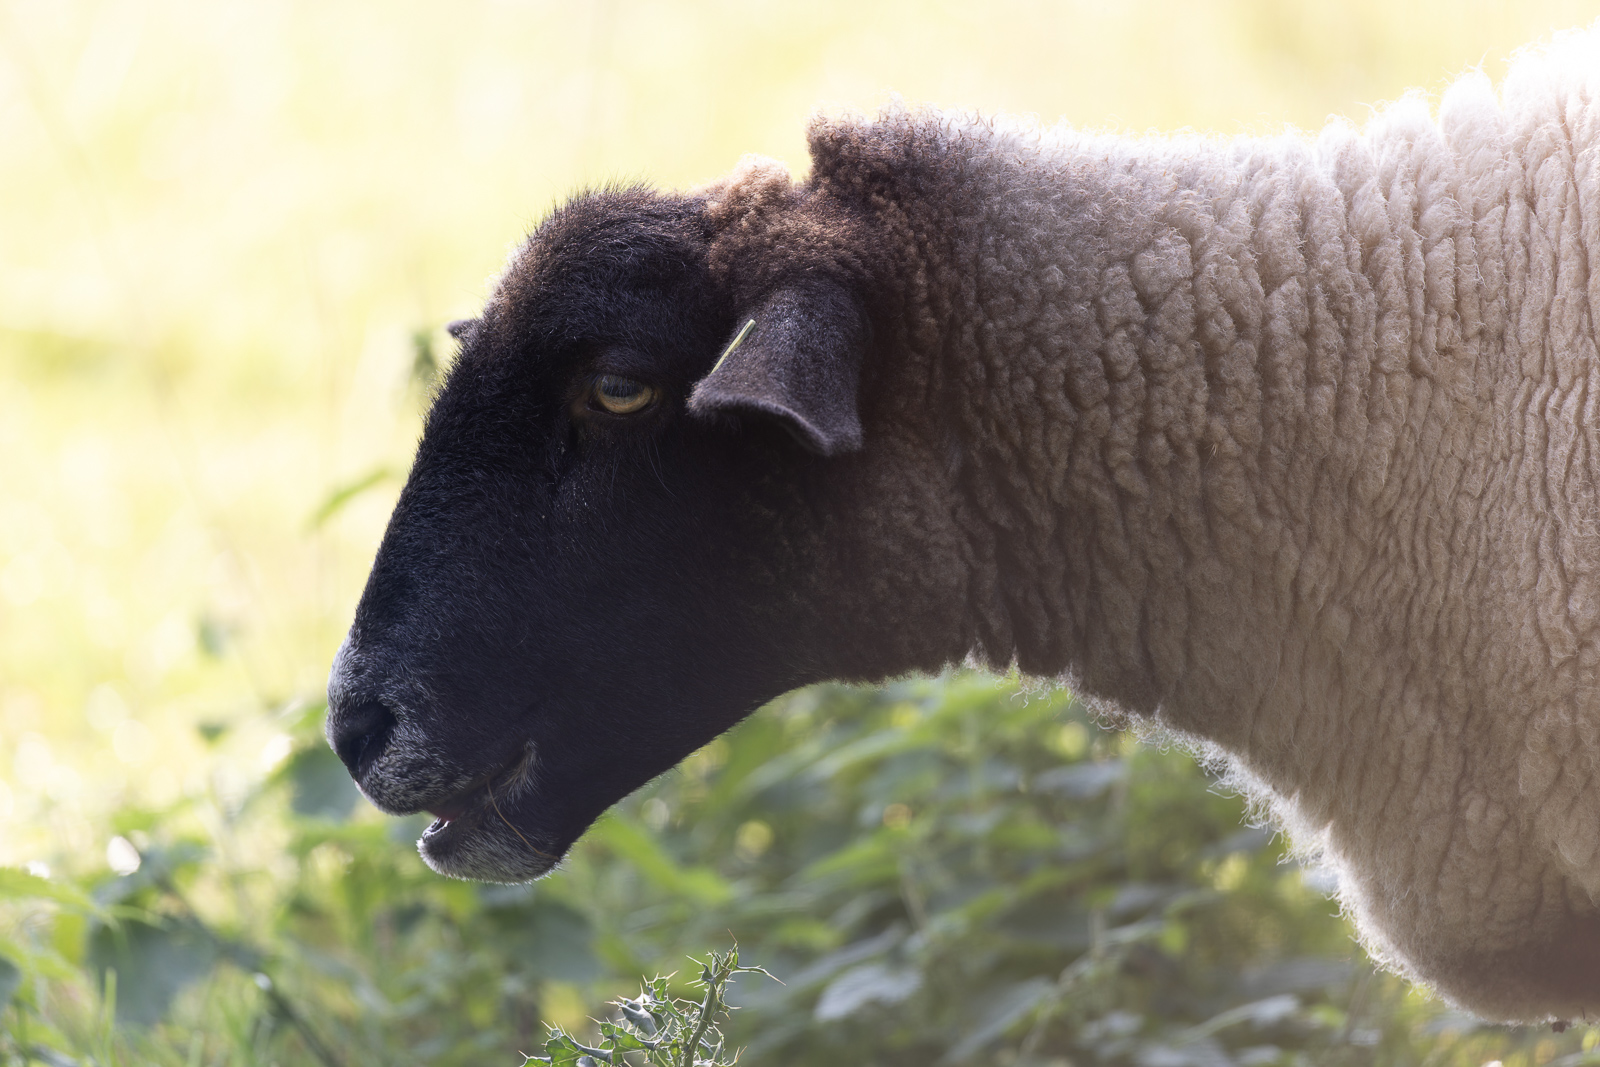 Sheep @500mm. Camera settings: 1/400 sec. f/5.6 ISO 800